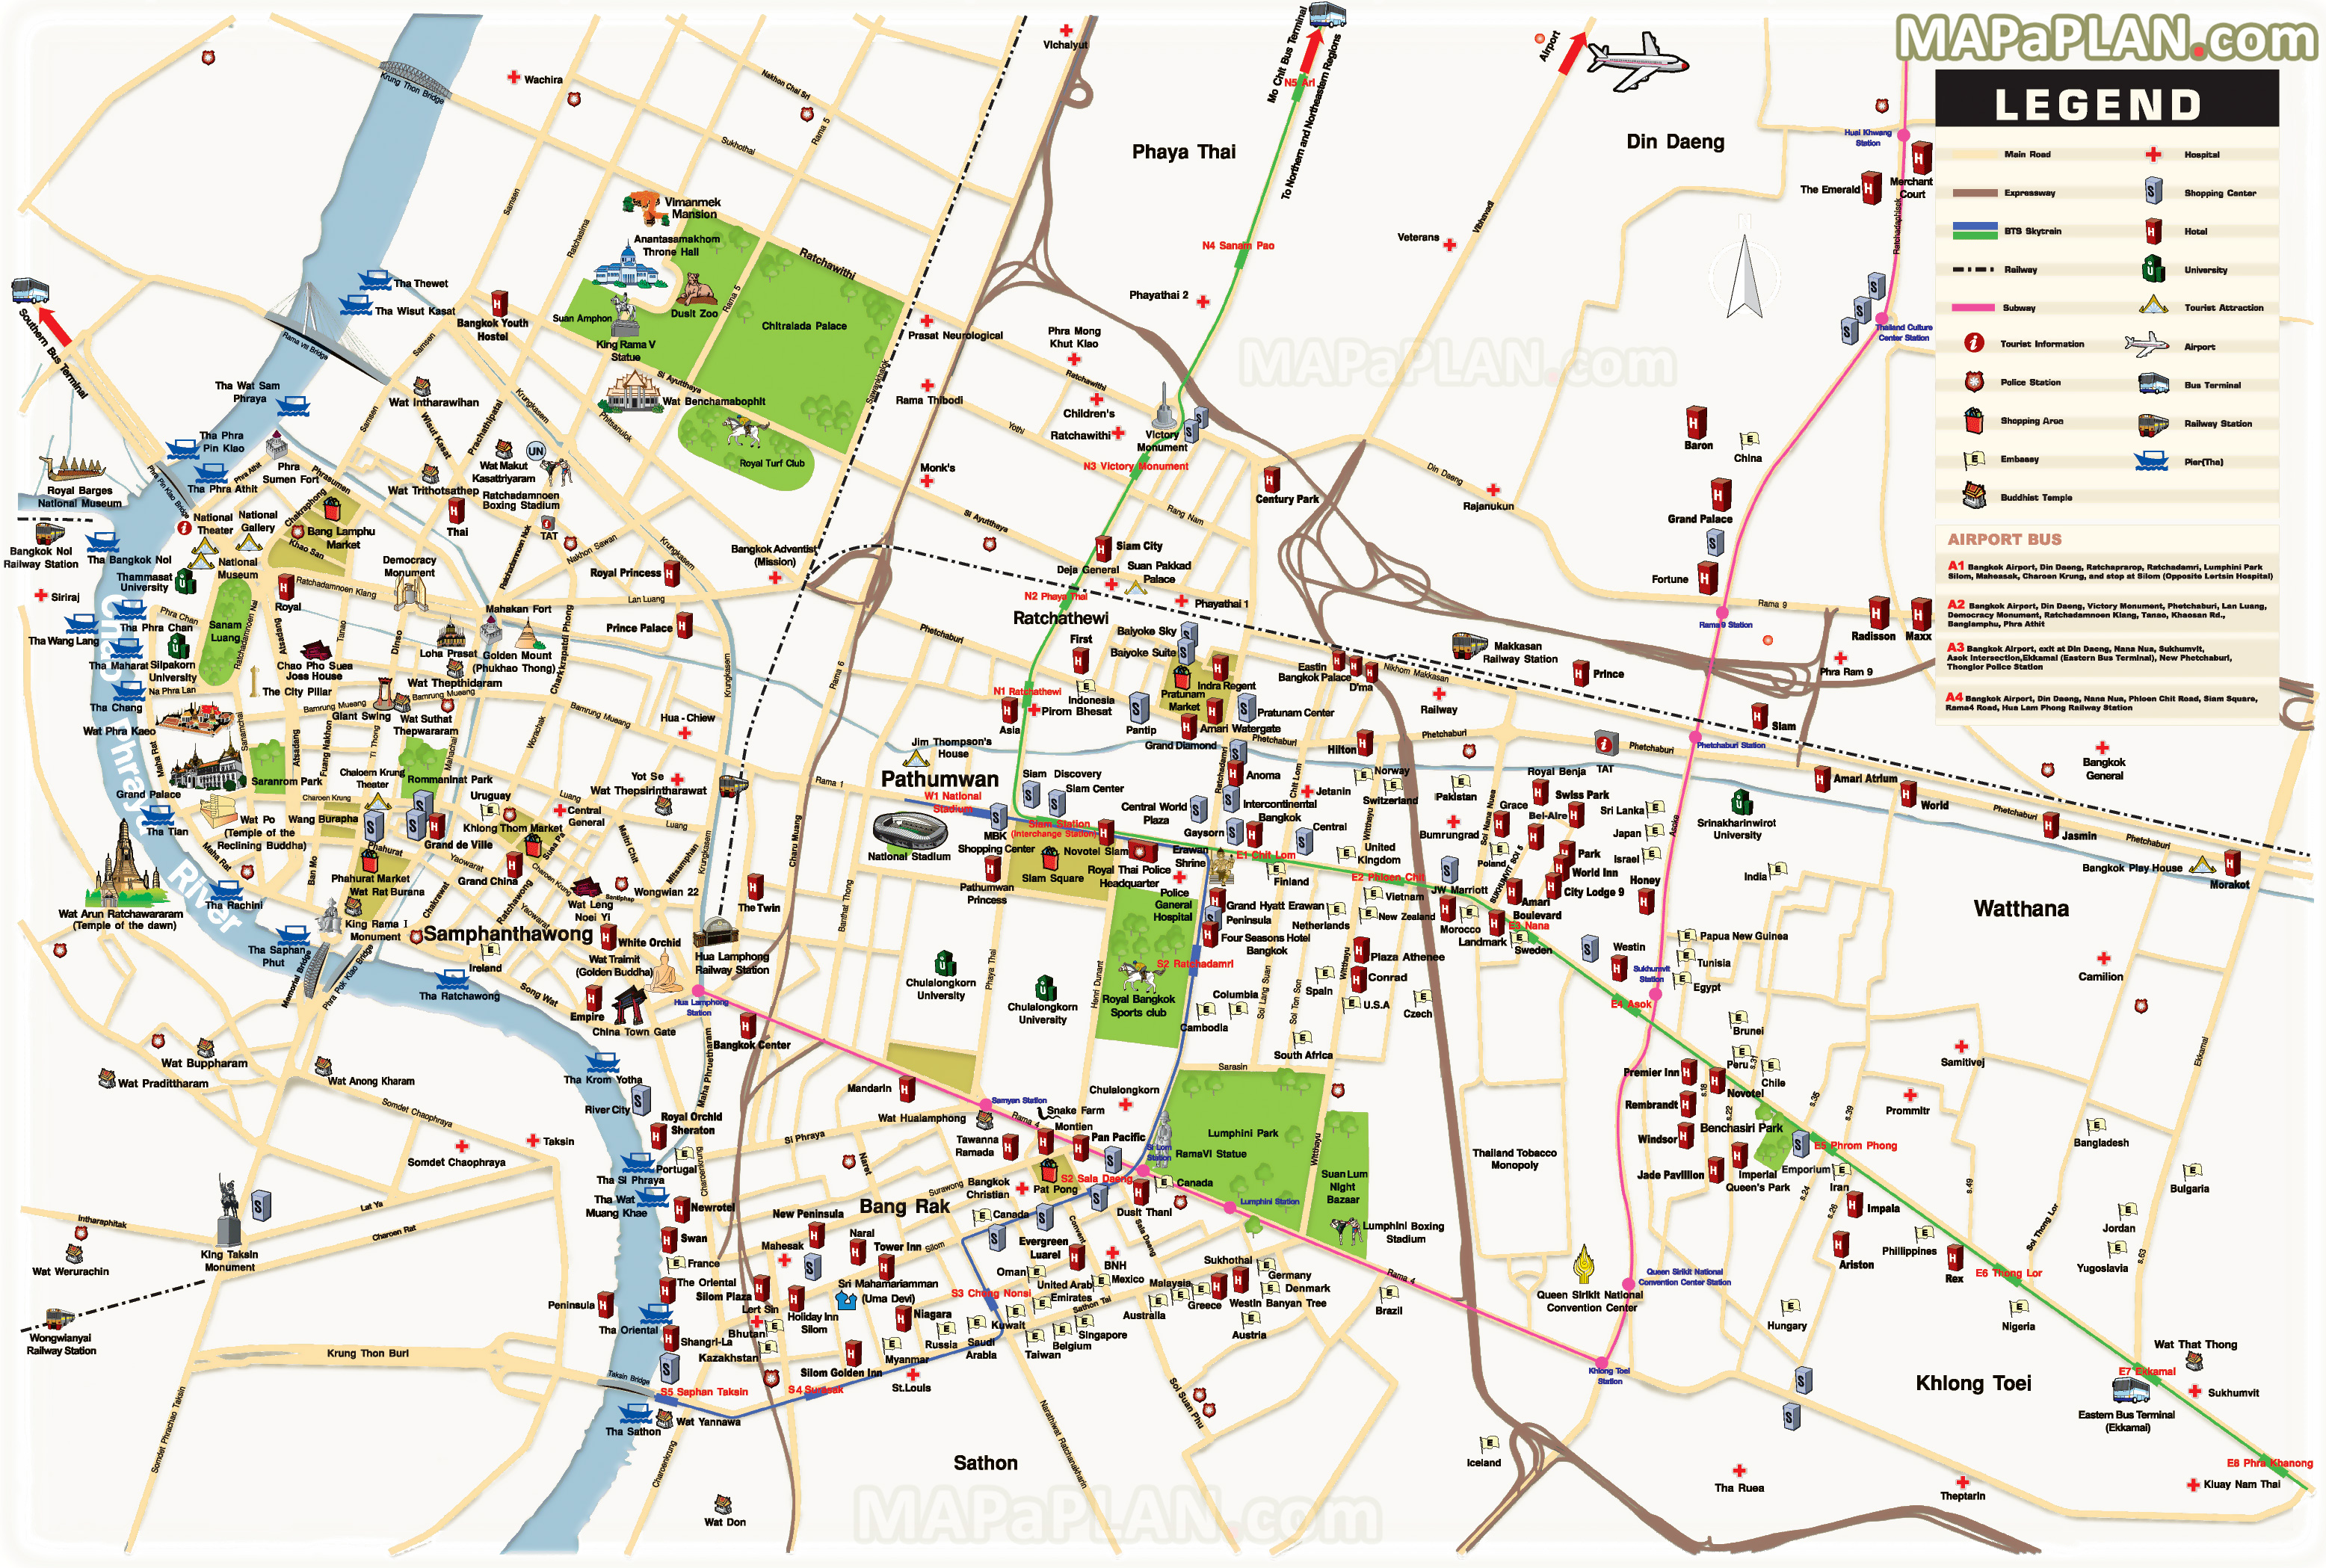 Bangkok maps - Top tourist attractions - Free, printable city street map